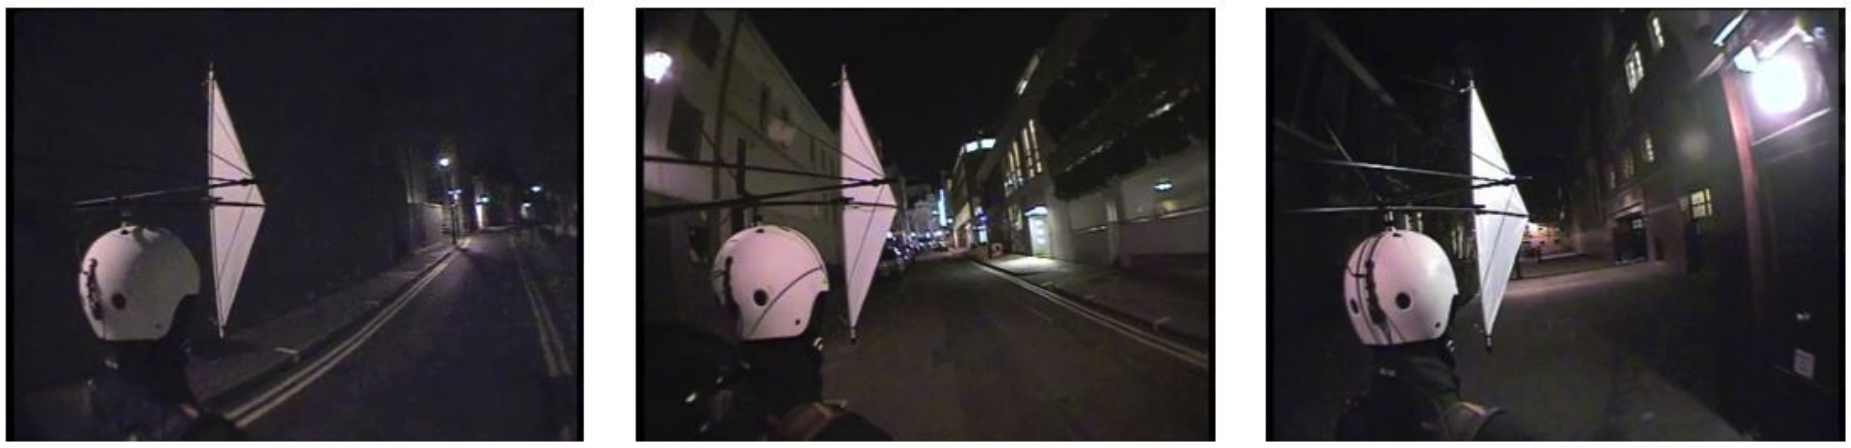 video stills of helmet with sail